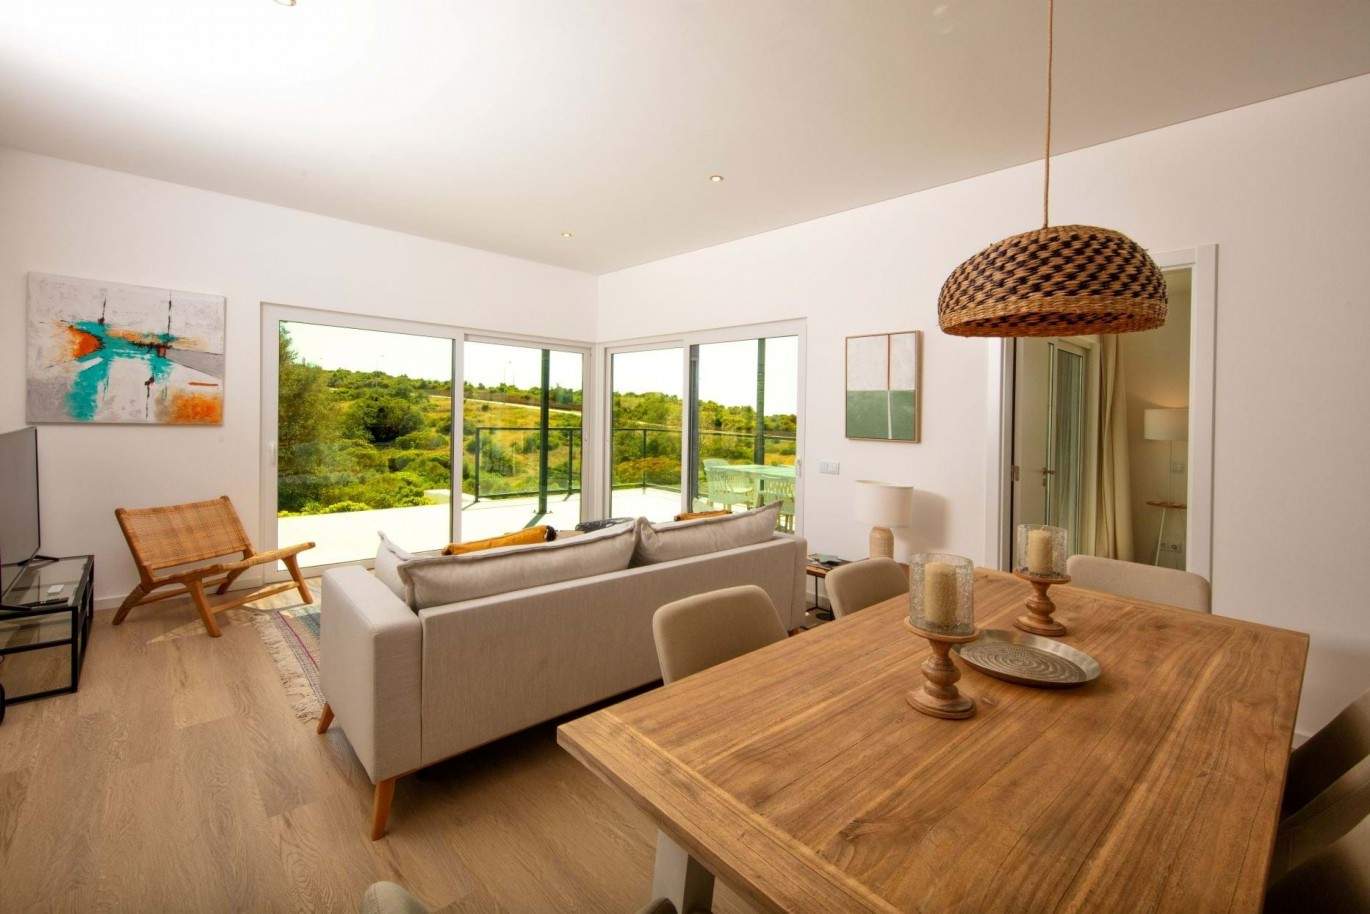 2+1 bedroom villa in resort, for sale in Carvoeiro, Algarve_204820